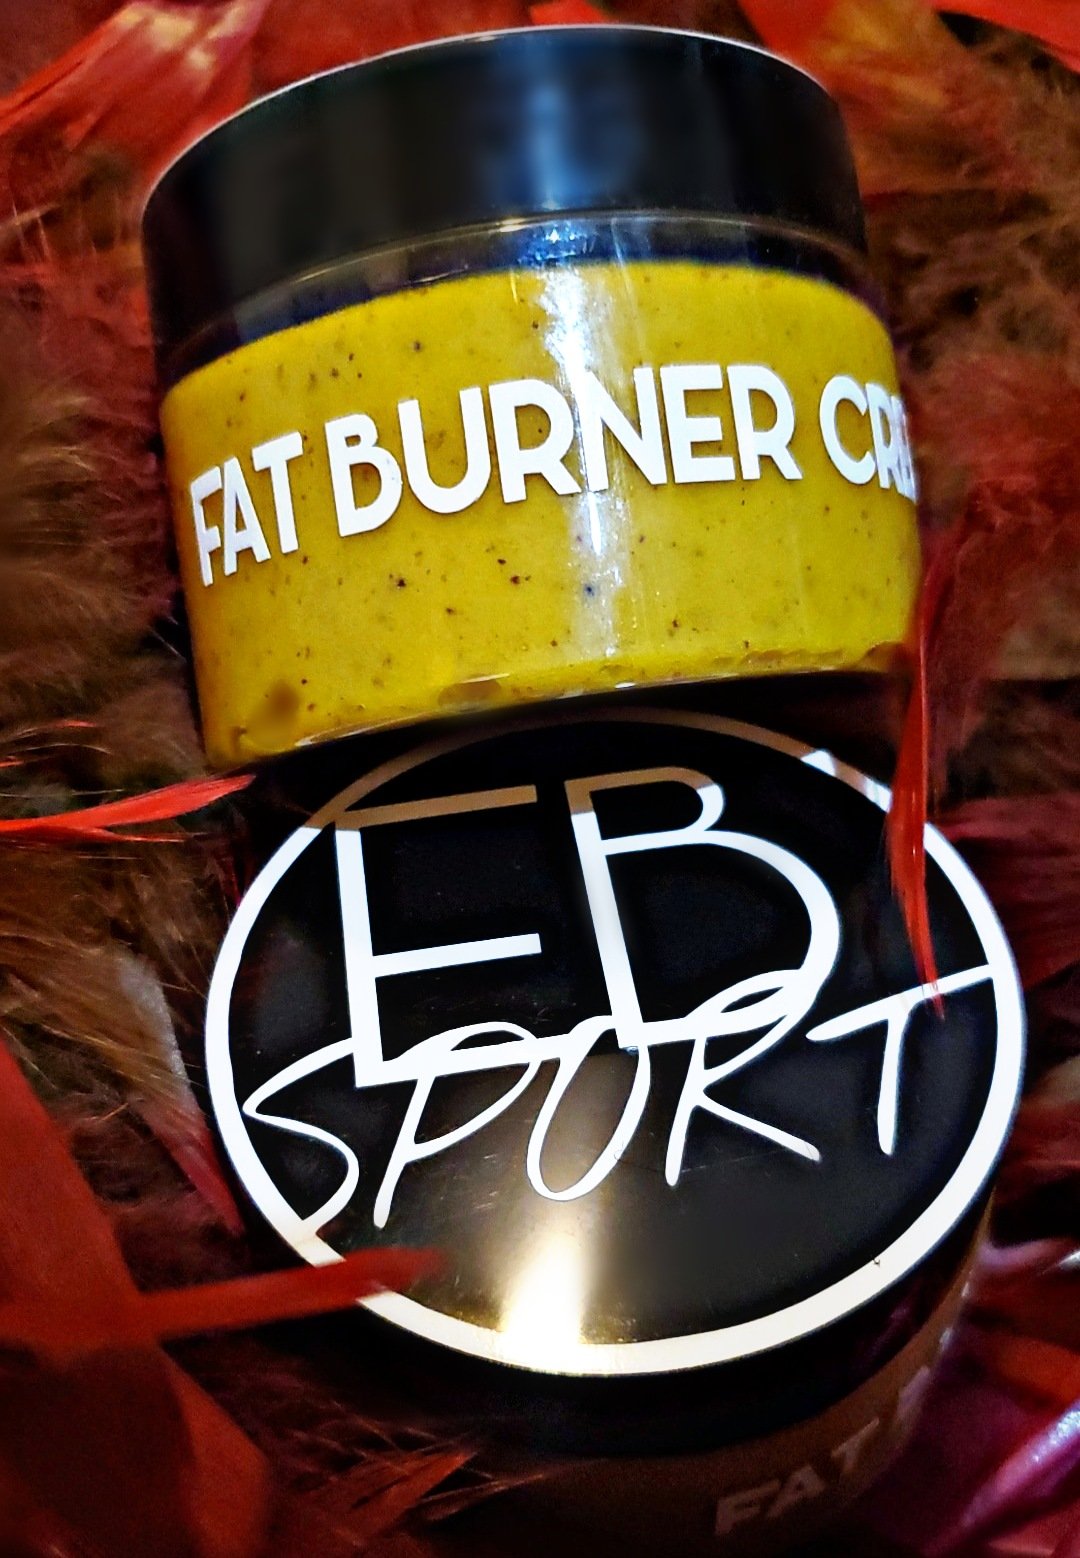 Image of EB Sport Fat Burner Cream "More Than Just A Fat Burner"